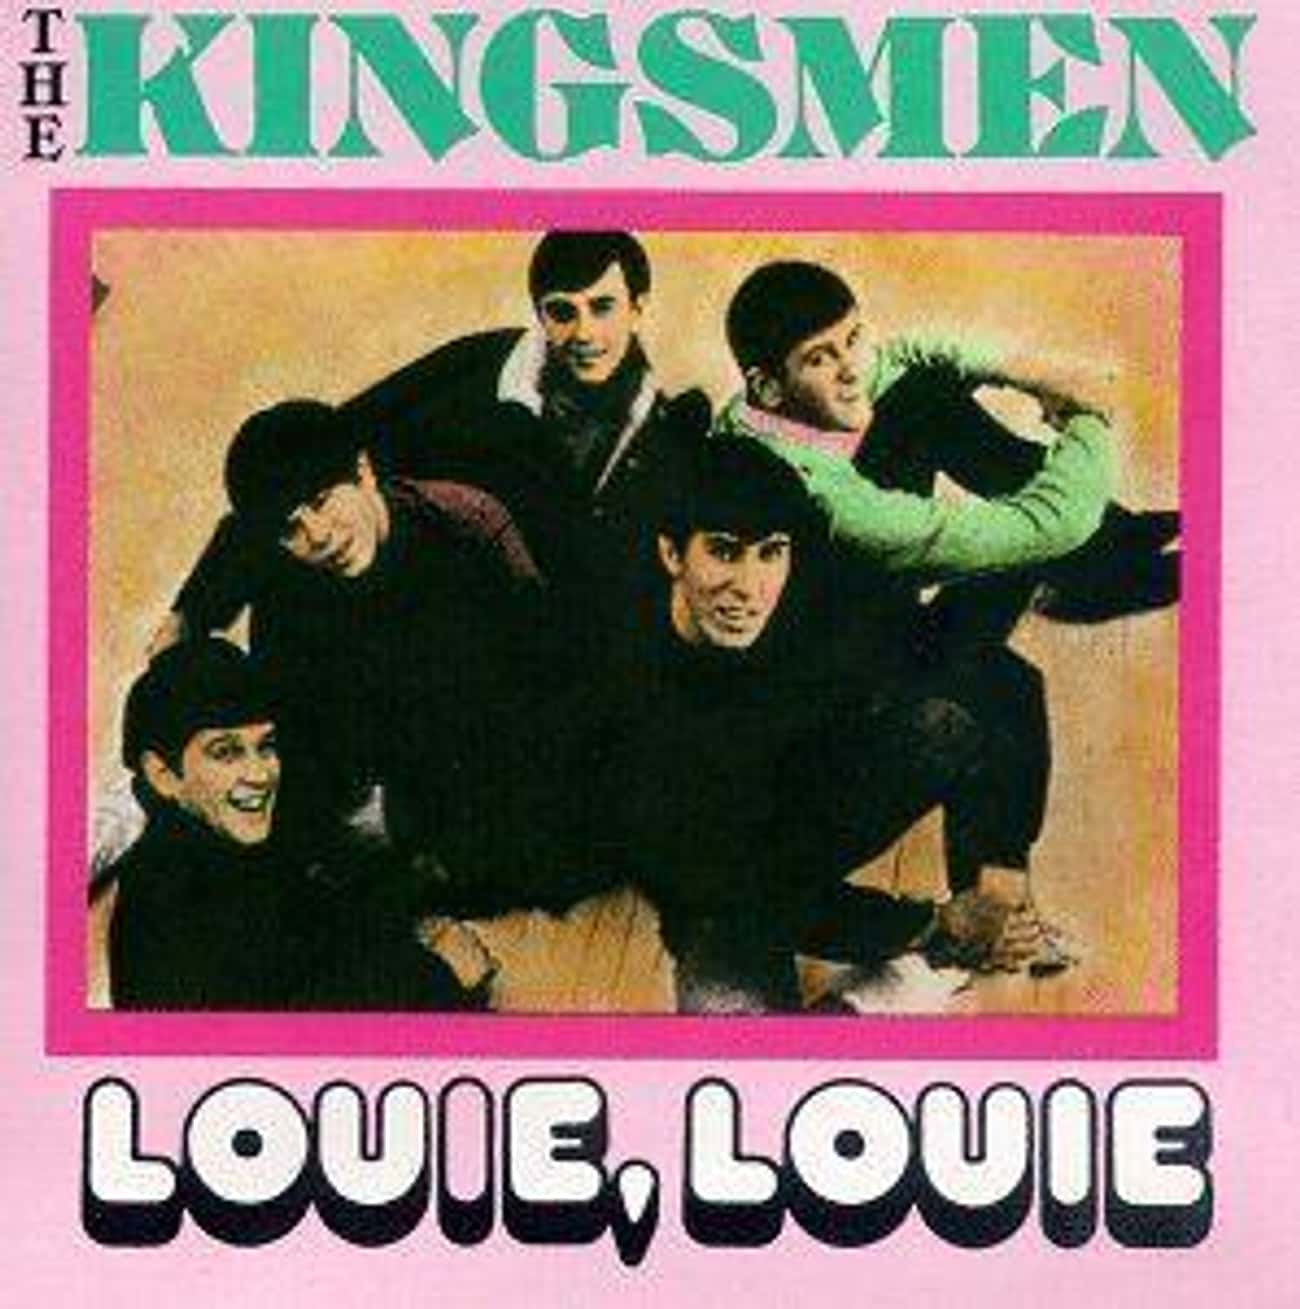 The Kingsmen's 'Louie Louie'